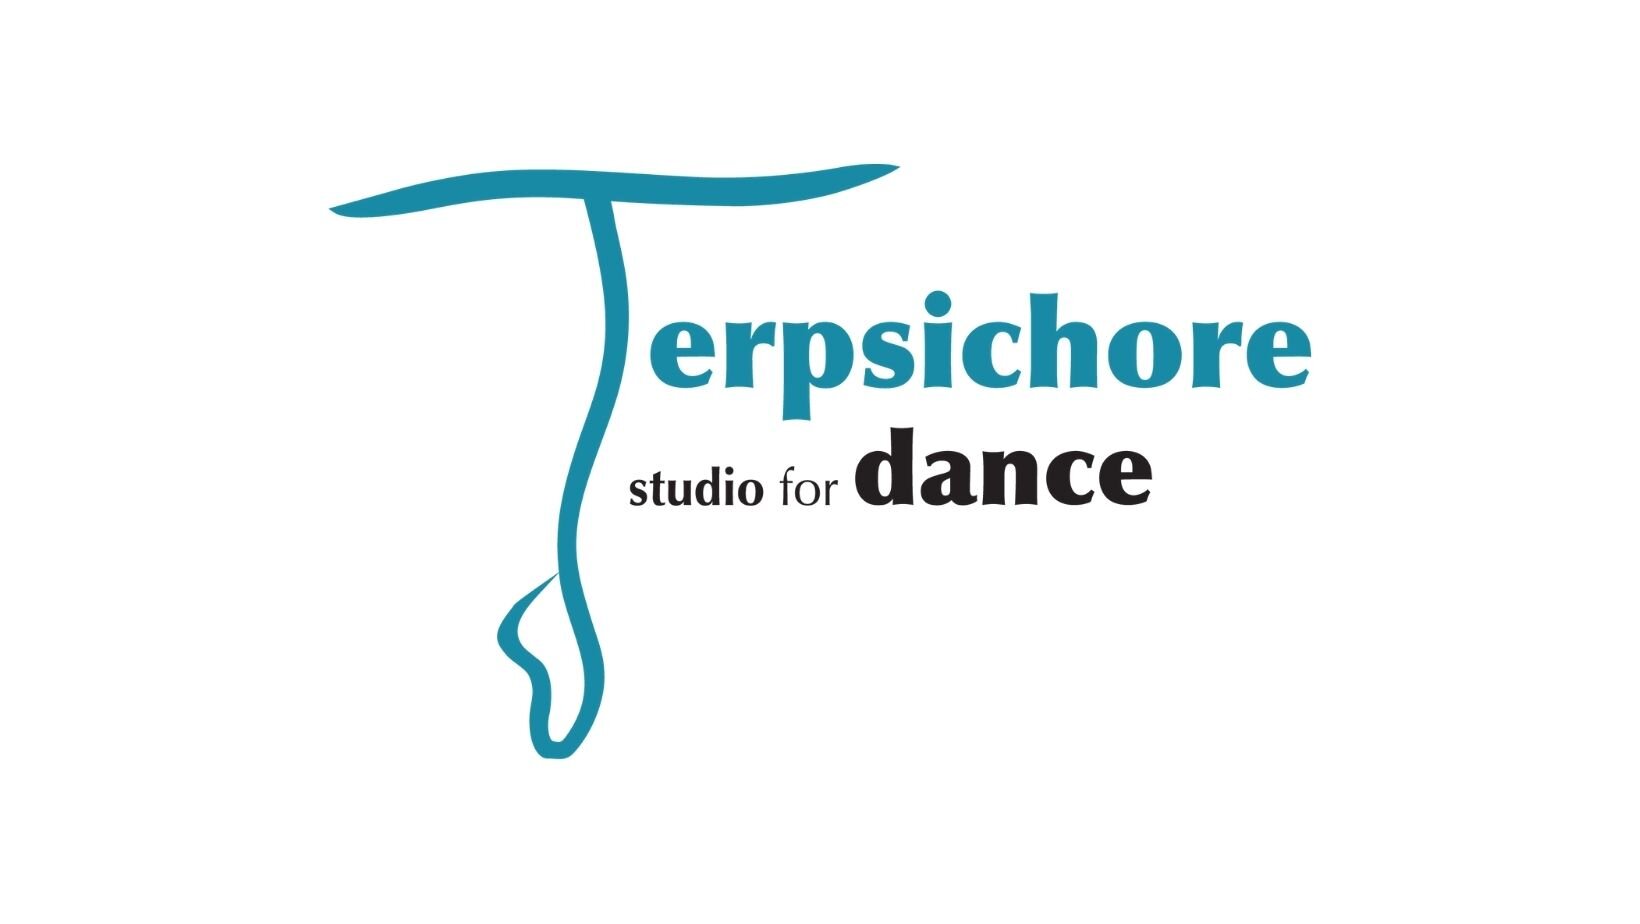 Terpsichore Studio for Dance